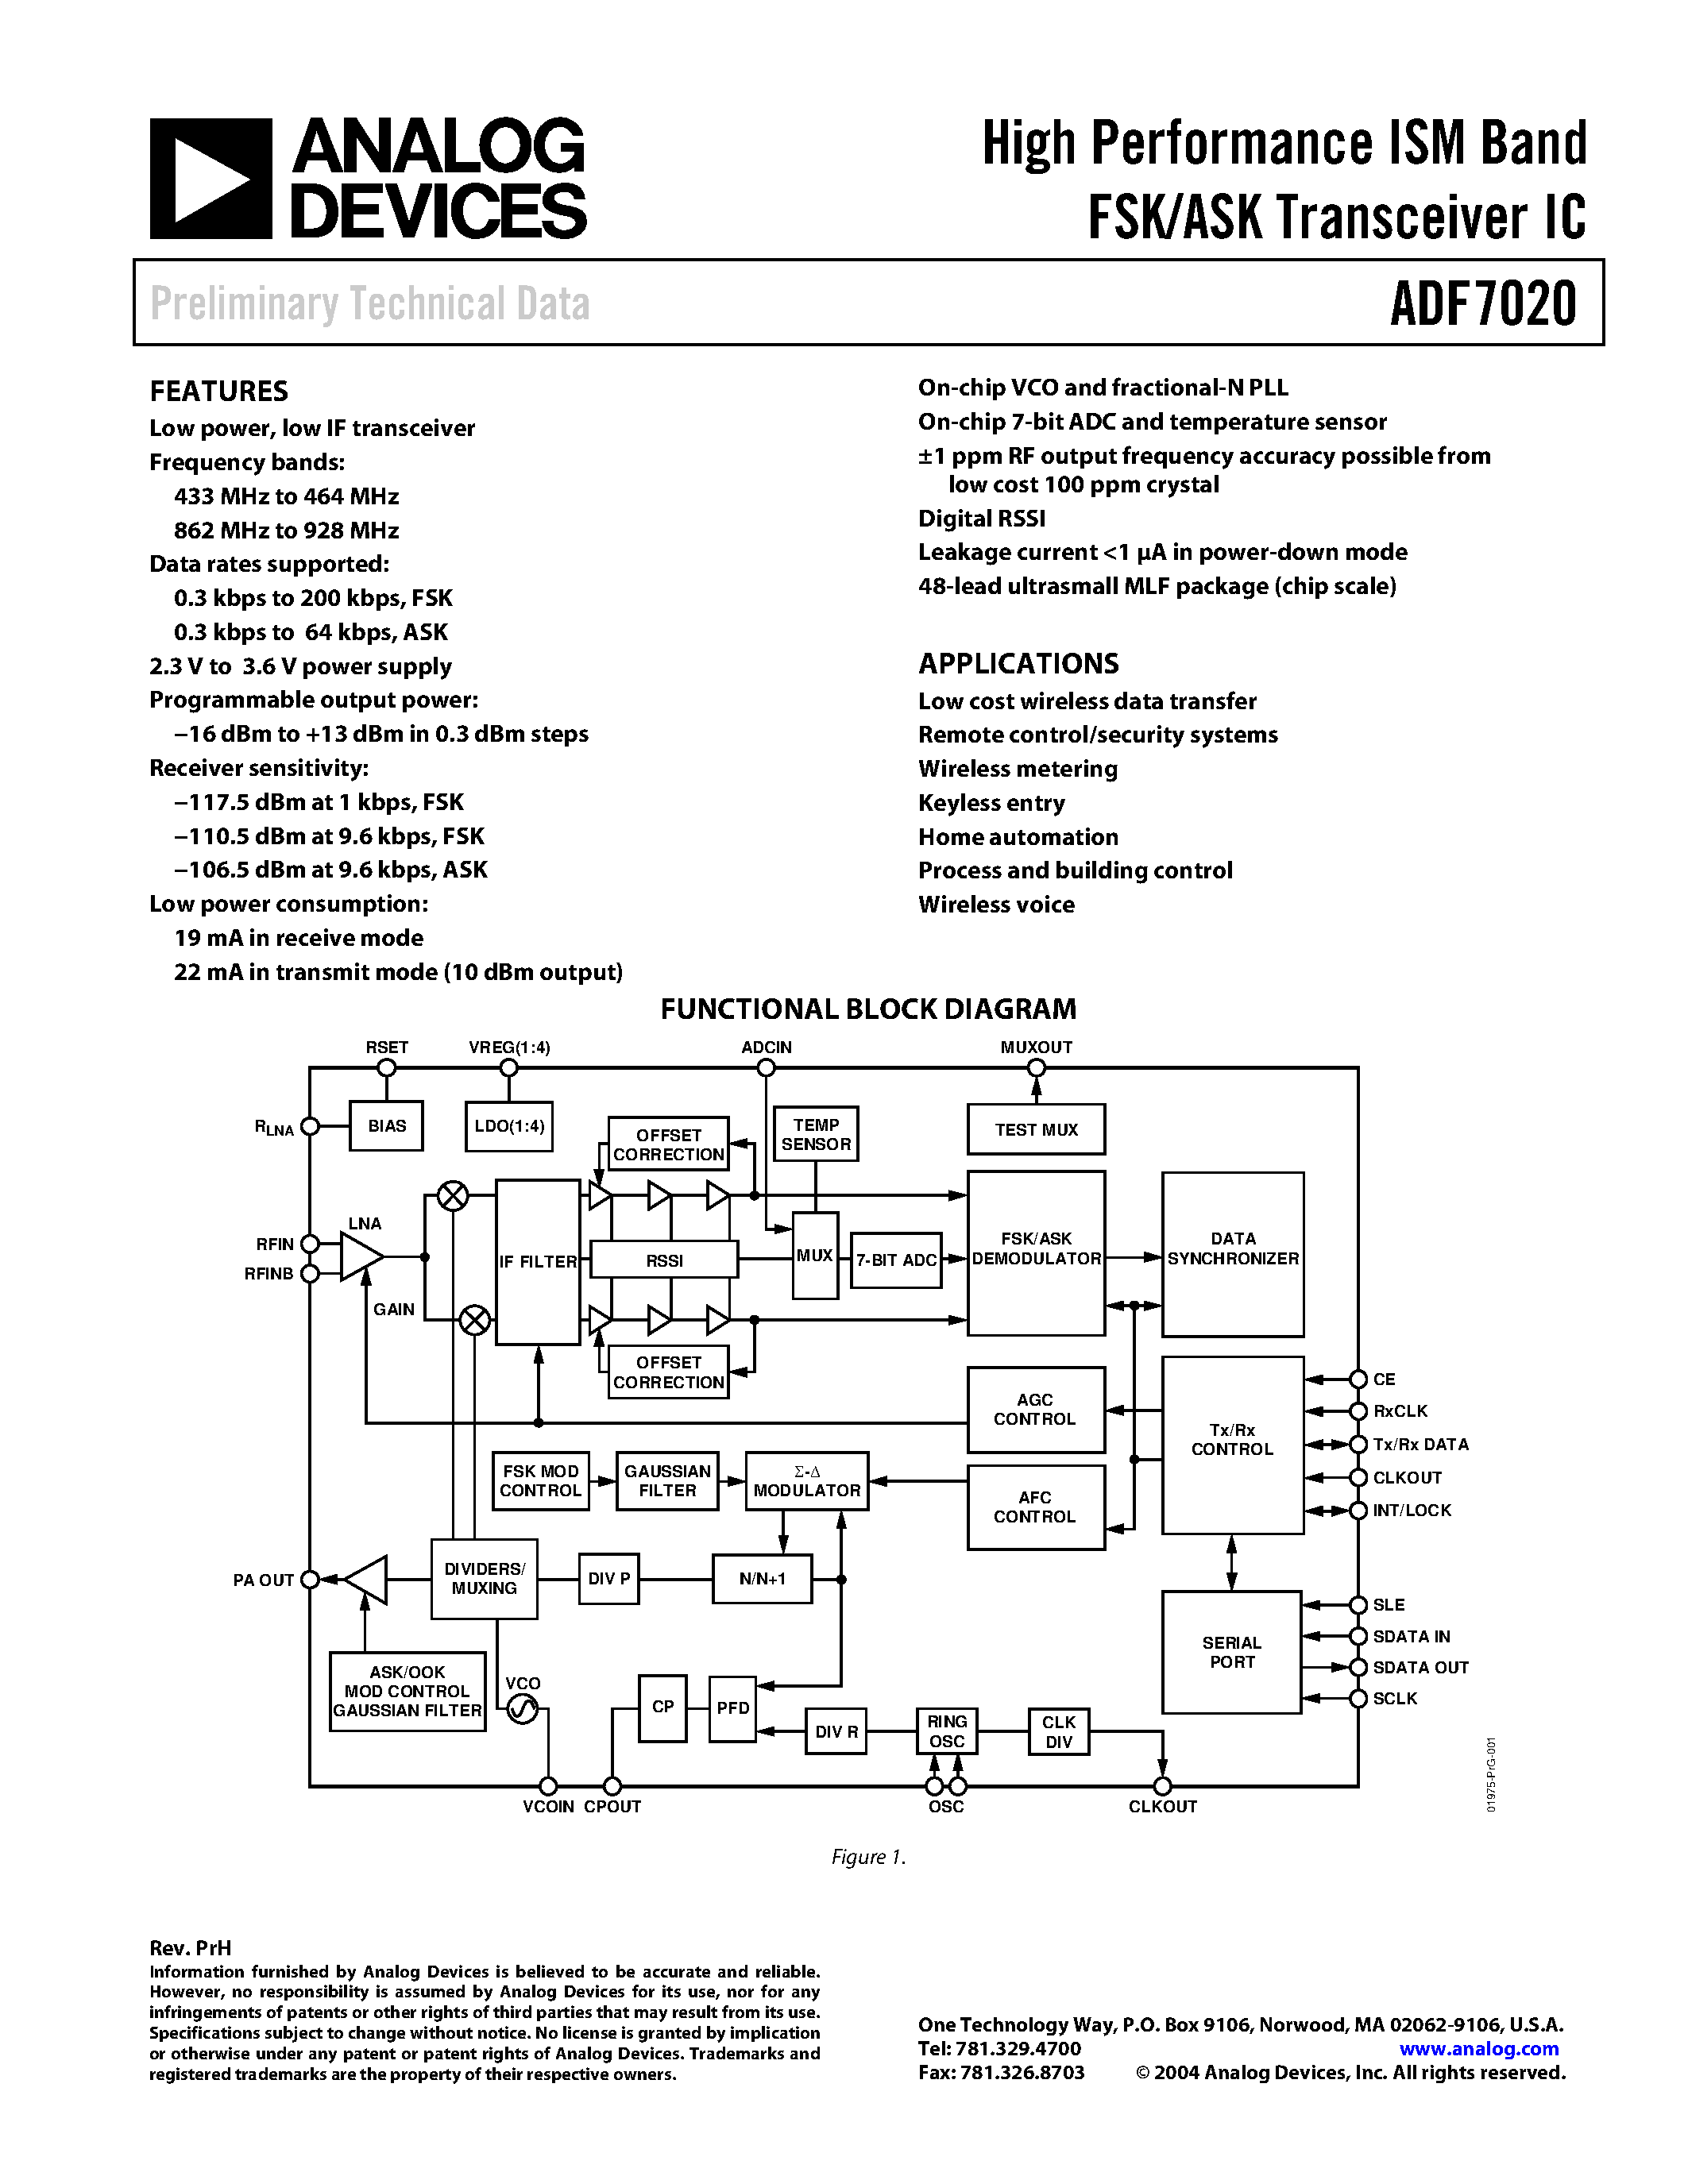 Даташит ADF7020 - High Performance ISM Band FSK/ASK Transceiver IC страница 1